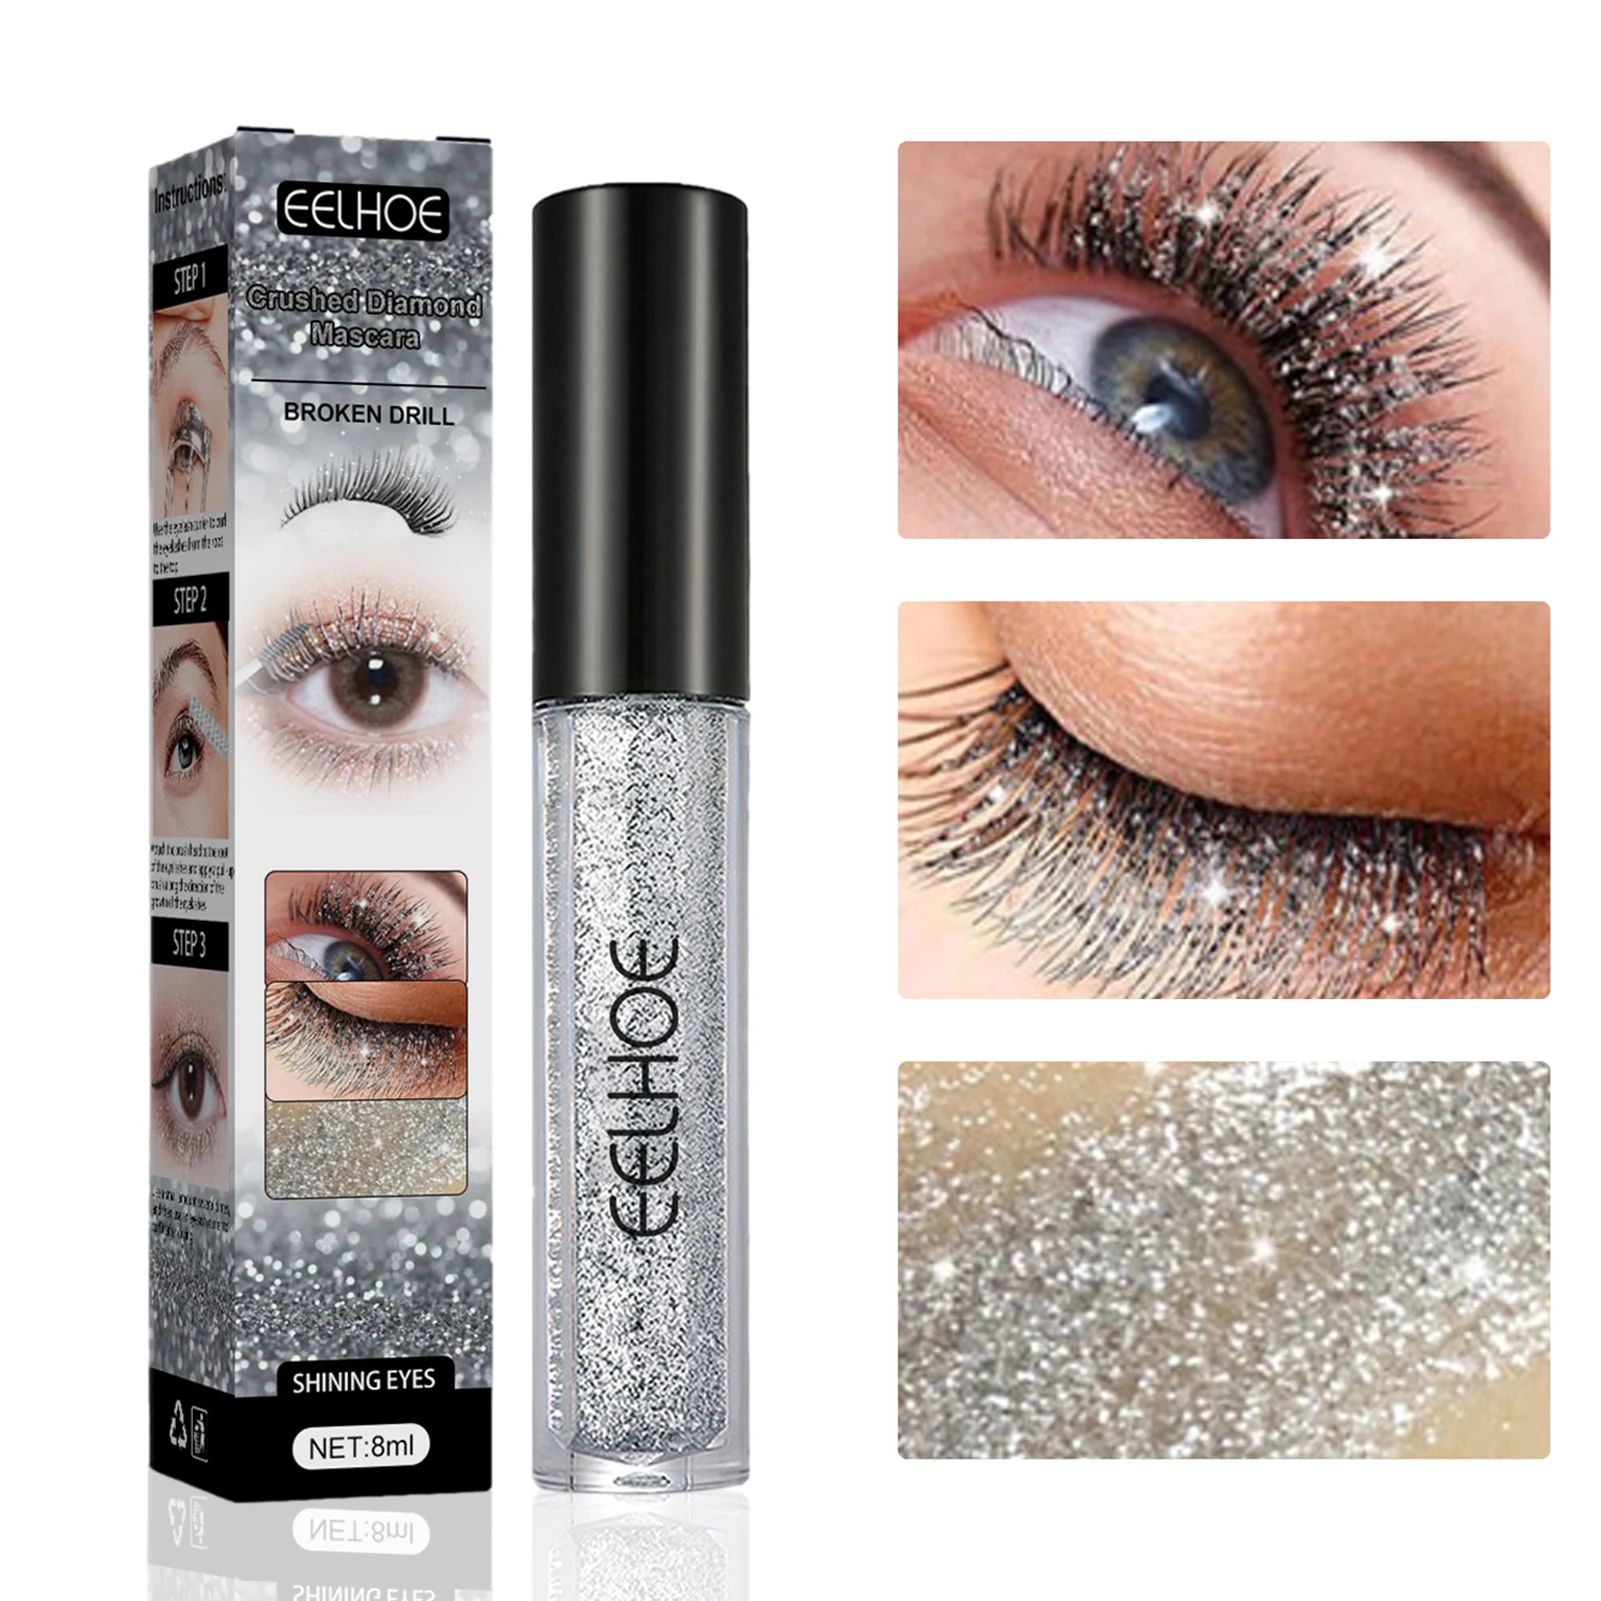 Glitter Diamond Mascara Fast Dry Eyelashes Curls Extension Lash Lengthening Waterproof Long Lasting Eyes Beauty Makeup Products